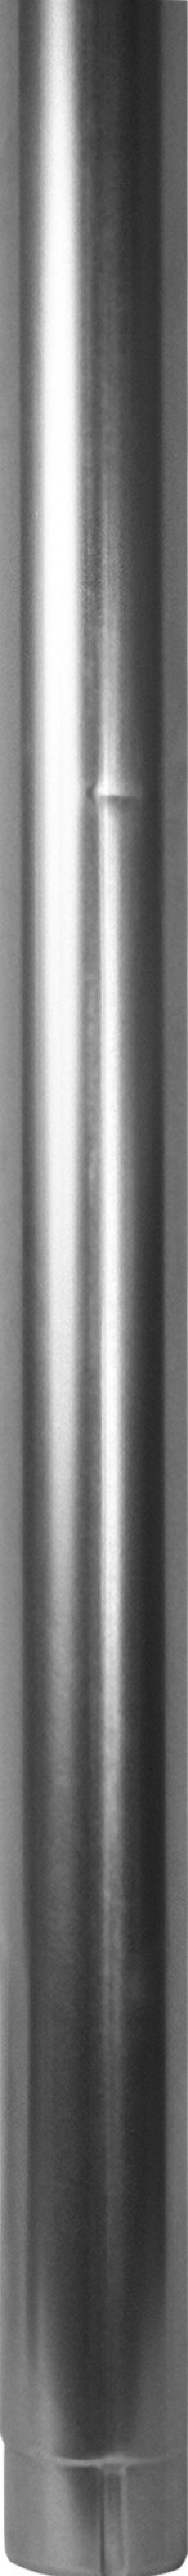 Труба круглая D90 мм 3000 мм оцинкованная